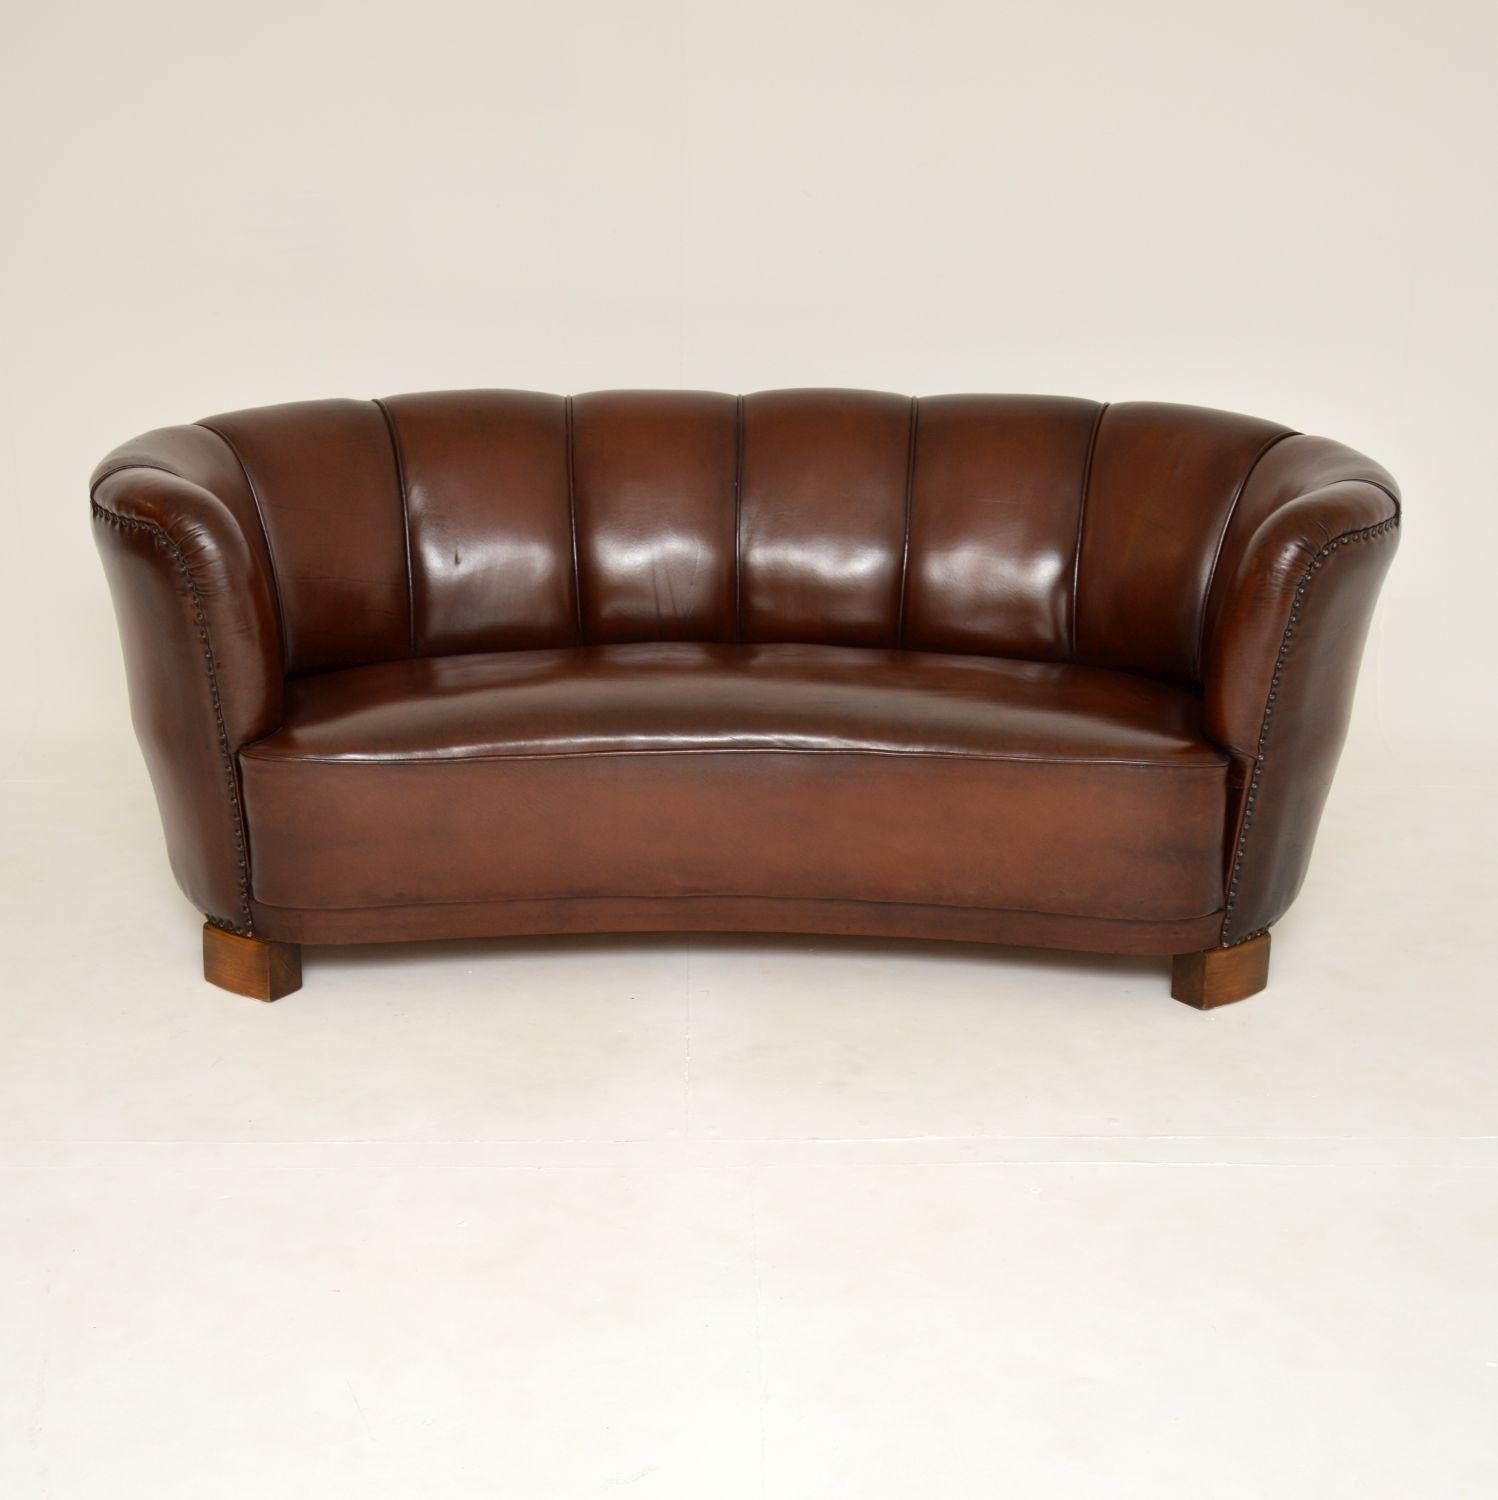 Mid-Century Modern 1940's Danish Leather Curved Banana Sofa